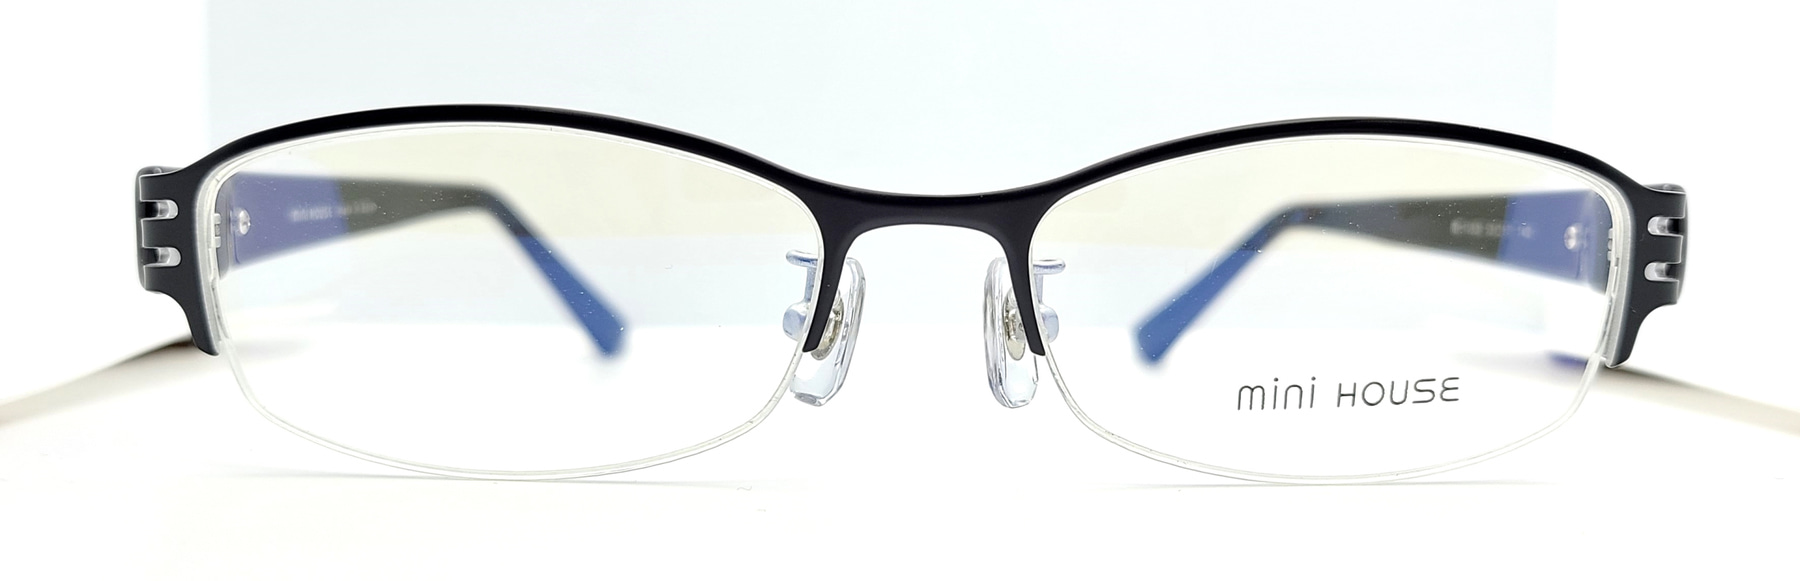 MINIHOUSE M-1053, Korean glasses, sunglasses, eyeglasses, glasses